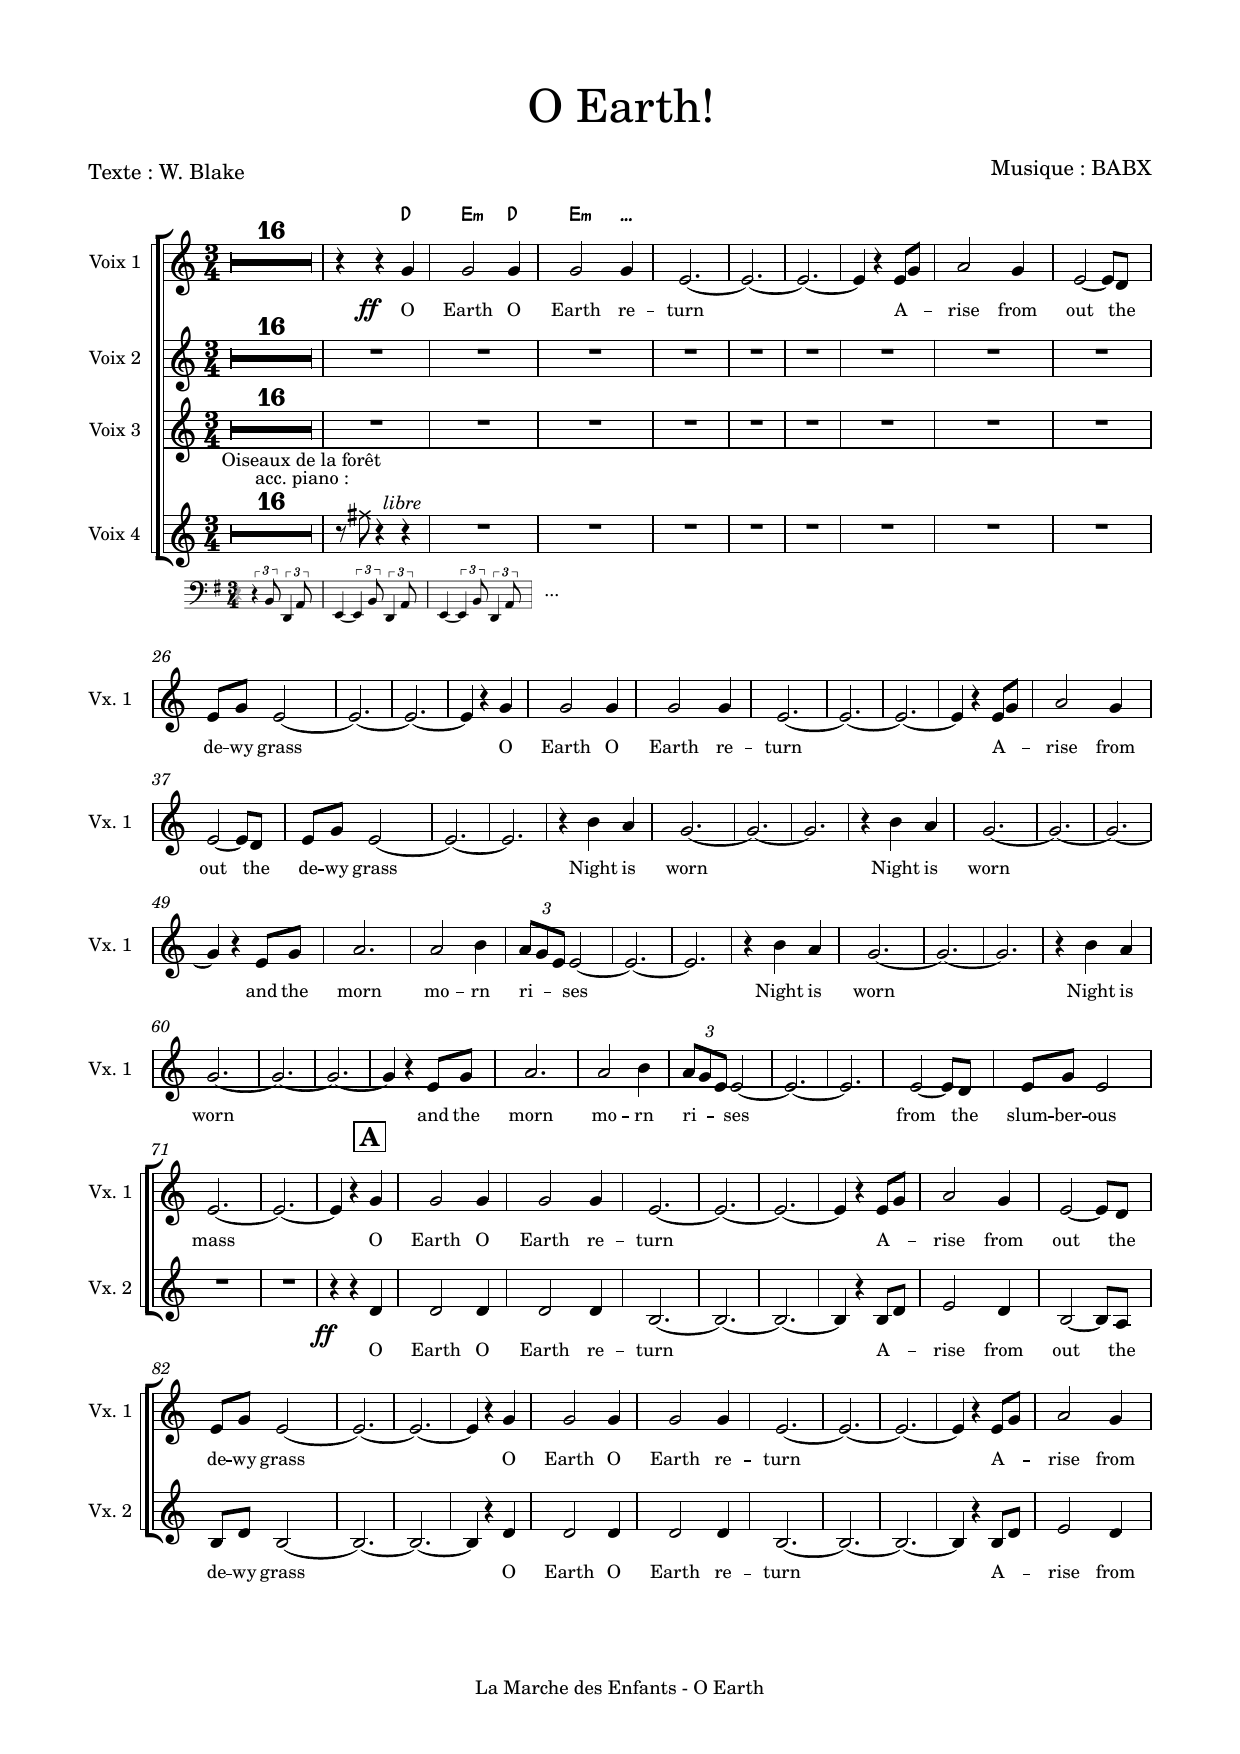 David Babin (Babx) O Earth! Sheet Music Notes & Chords for Choir - Download or Print PDF